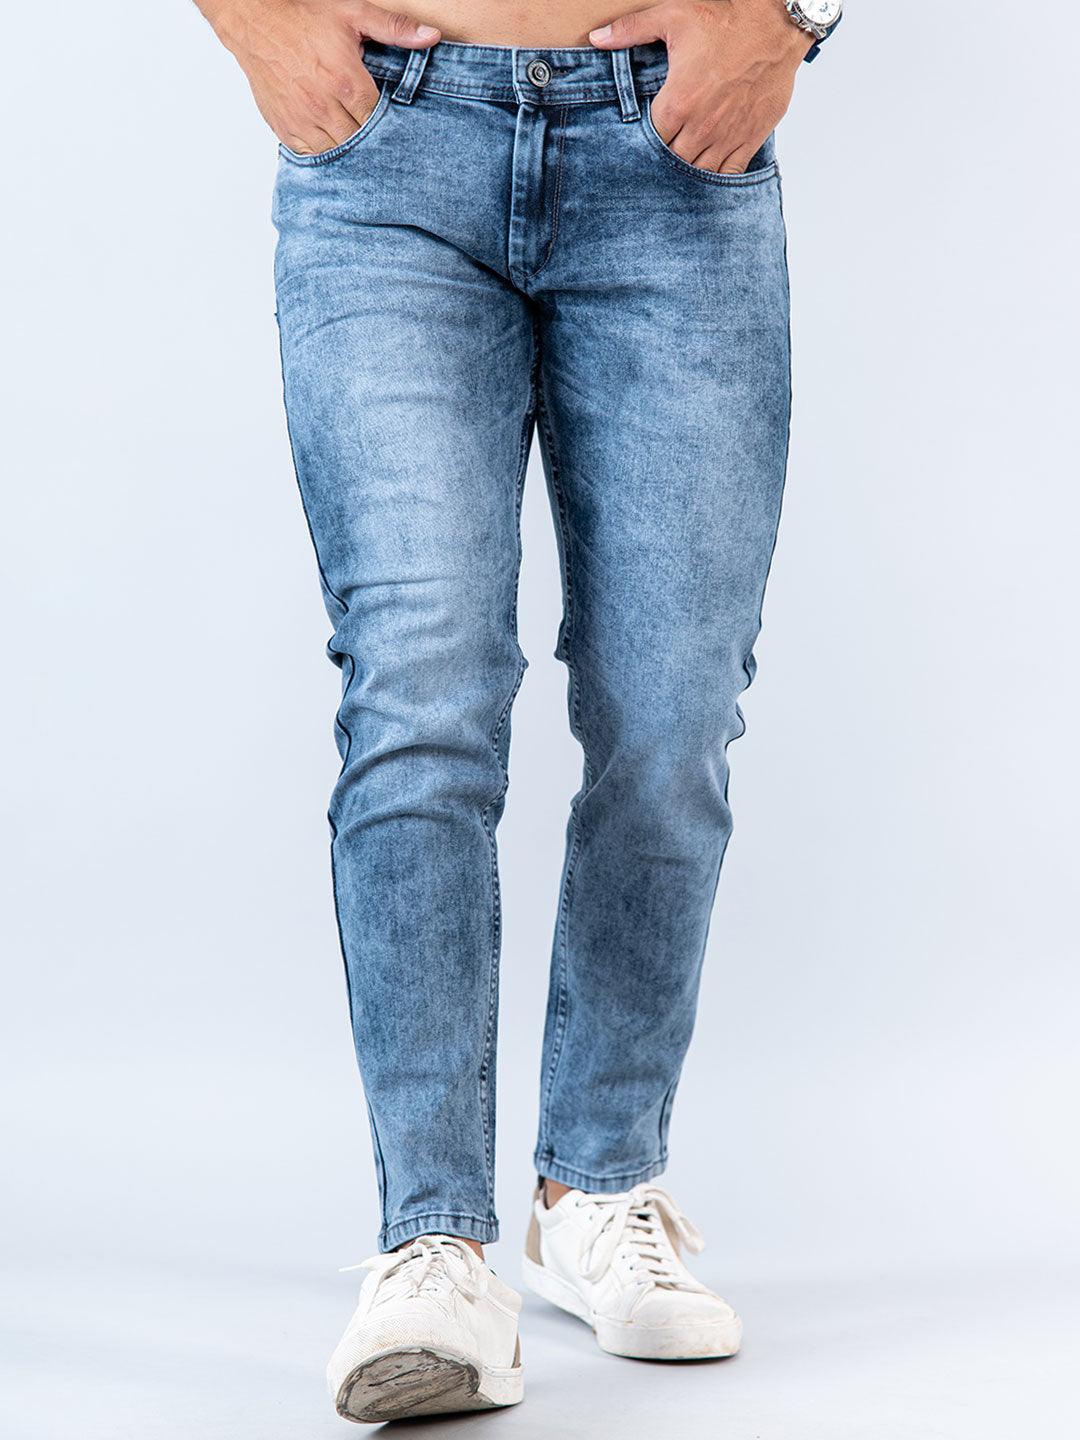 Ankle fit formal pant for men 🔥@fashionforever1185 #shorts #trending  #viral #new #formalpant - YouTube